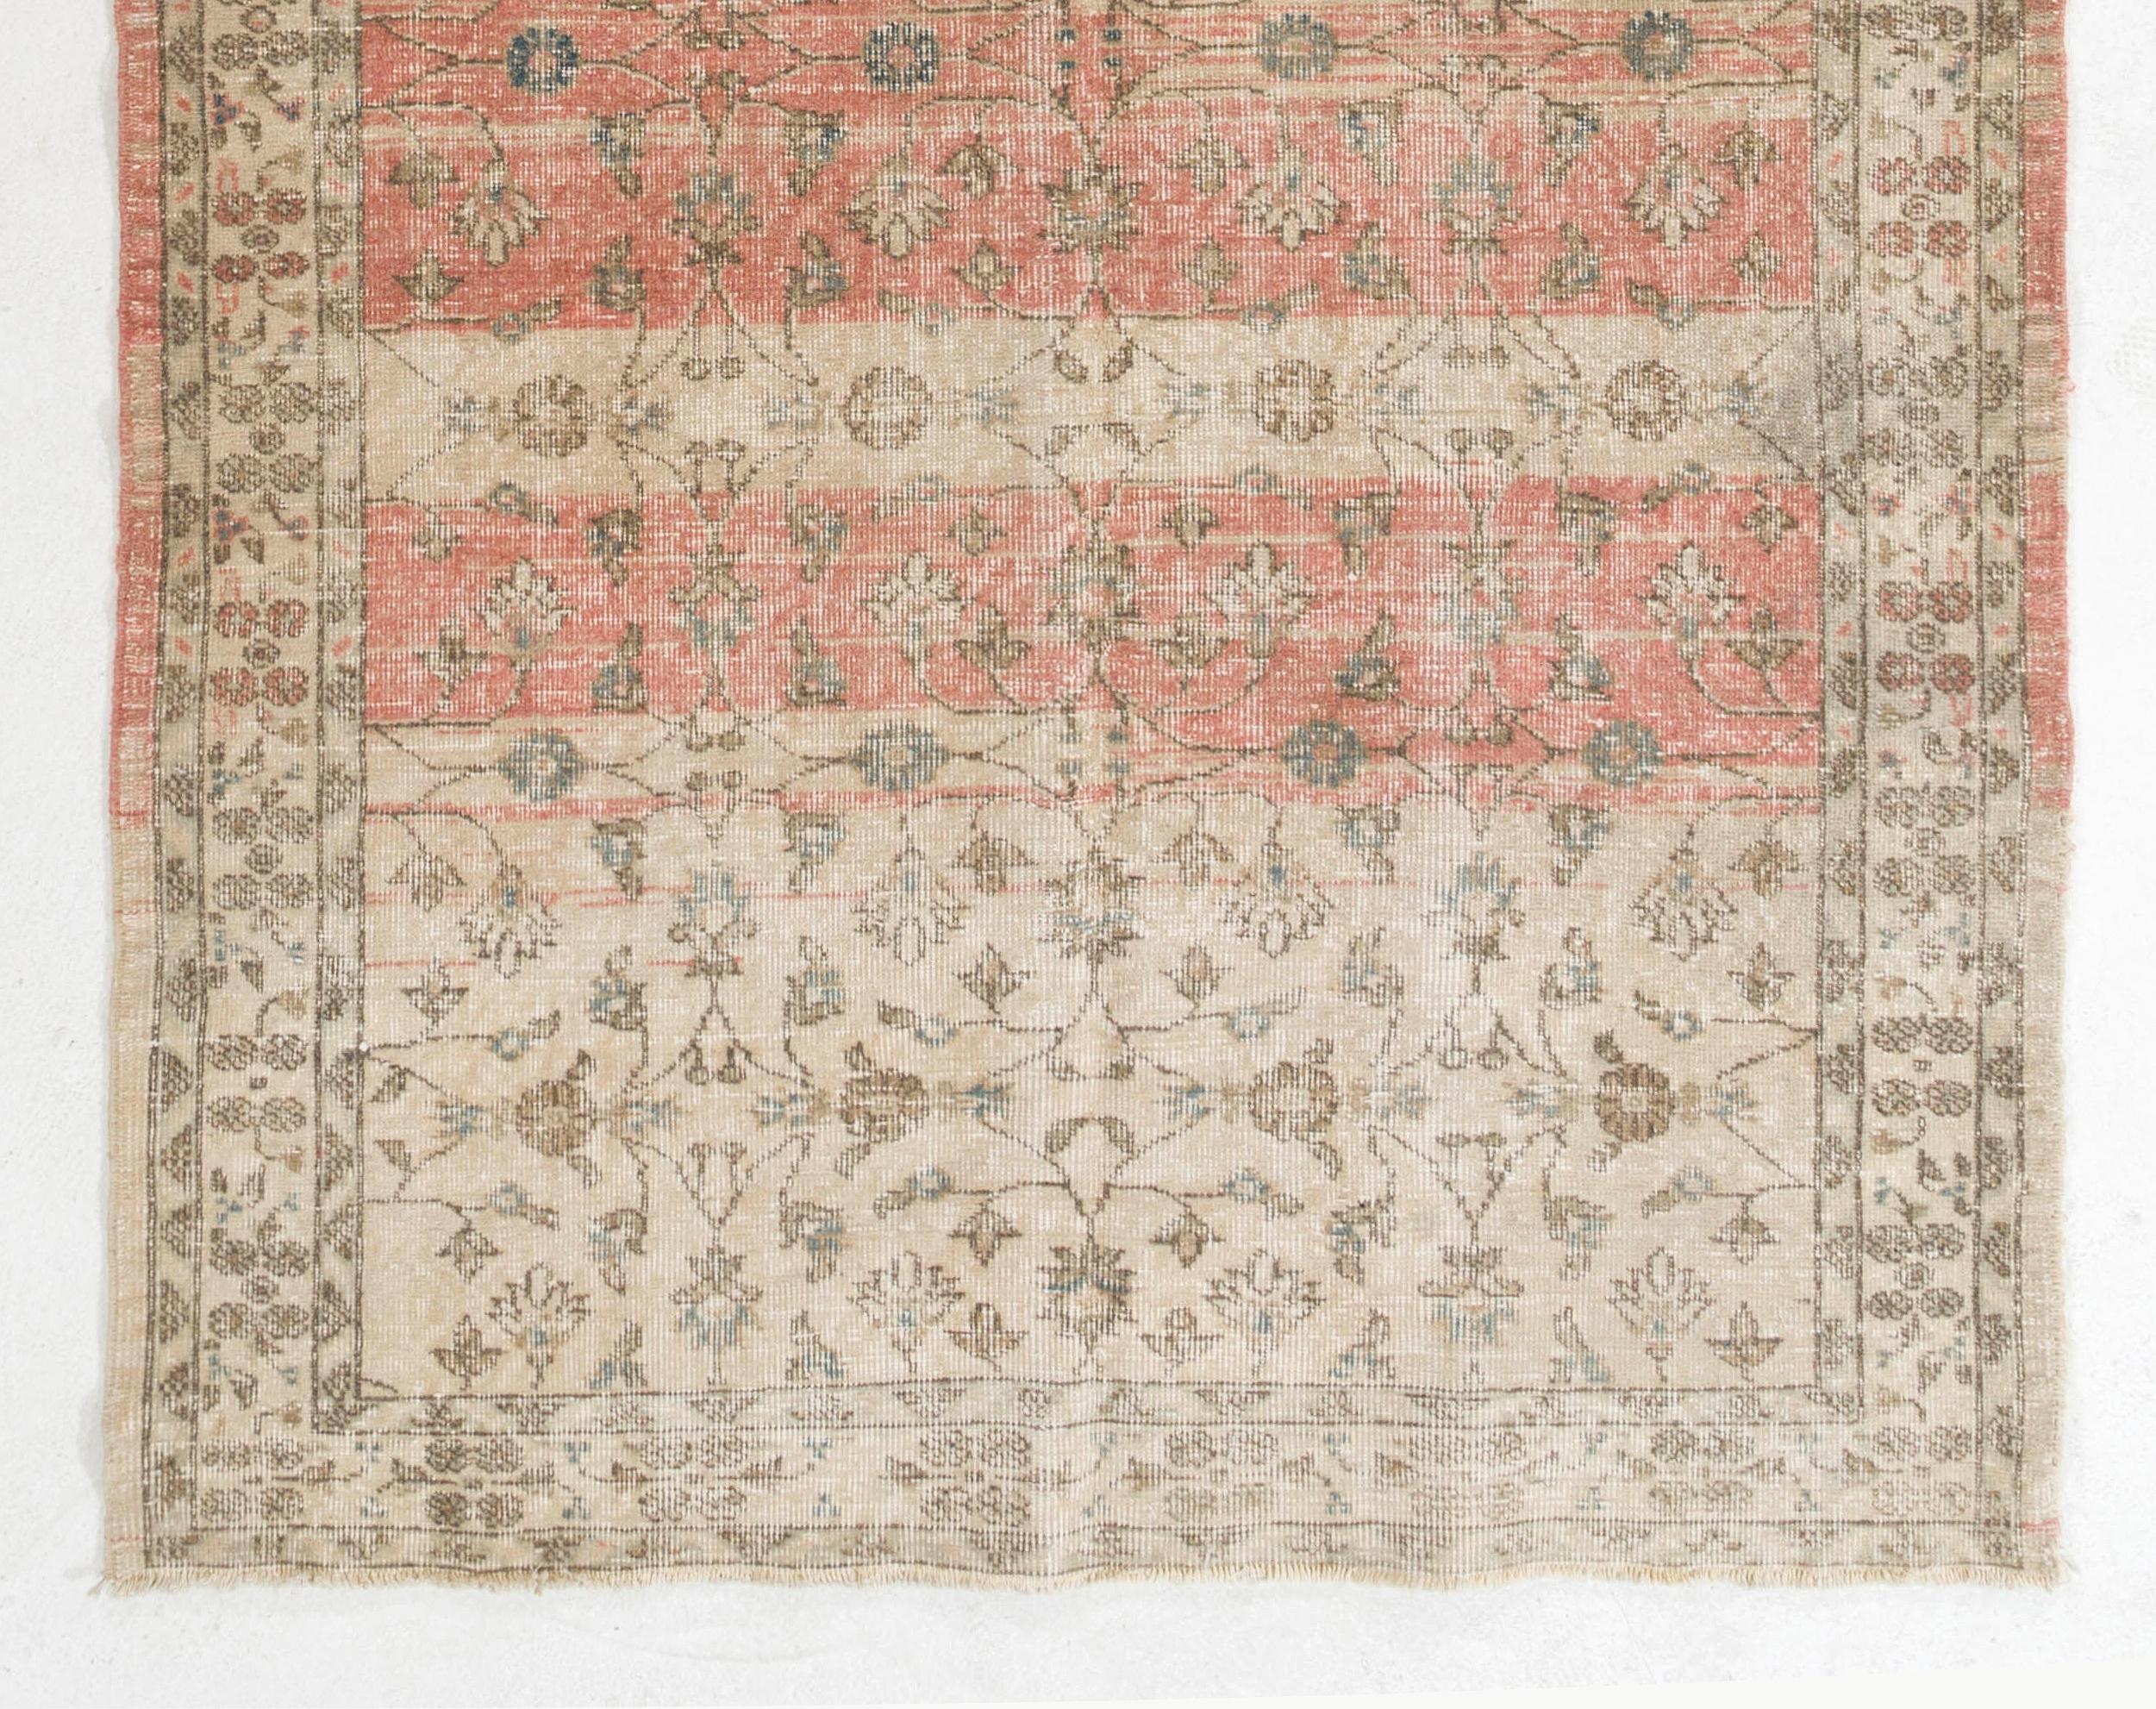 Hand-Knotted Vintage Floral Turkish Carpet Runner in Red & Beige, Handmade Wool Rug For Sale